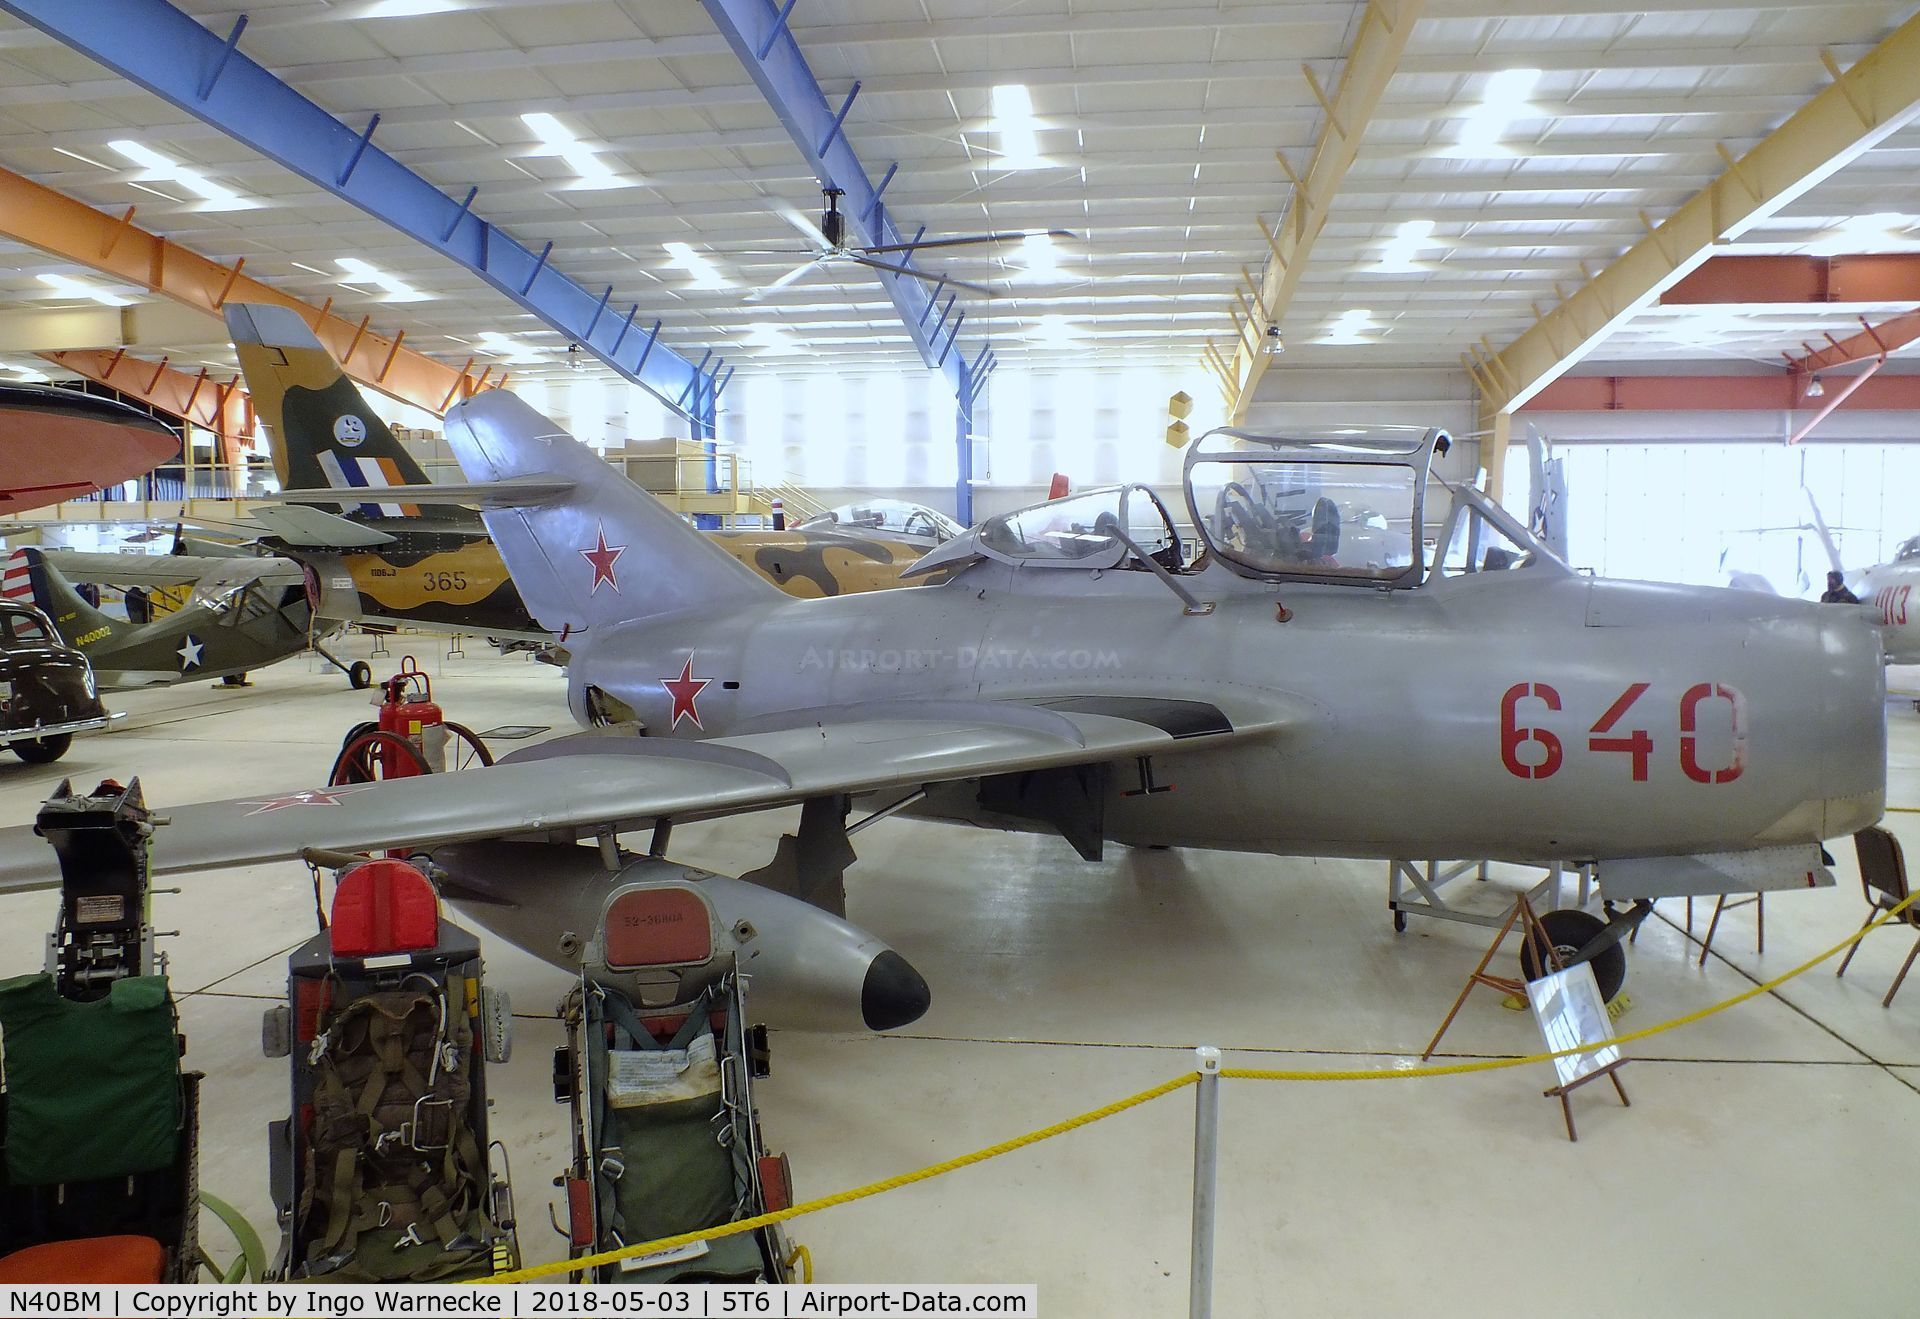 N40BM, 1953 Mikoyan-Gurevich MIG 15 C/N 1A06040, Mikoyan i Gurevich MiG-15UTI MIDGET at the War Eagles Air Museum, Santa Teresa NM